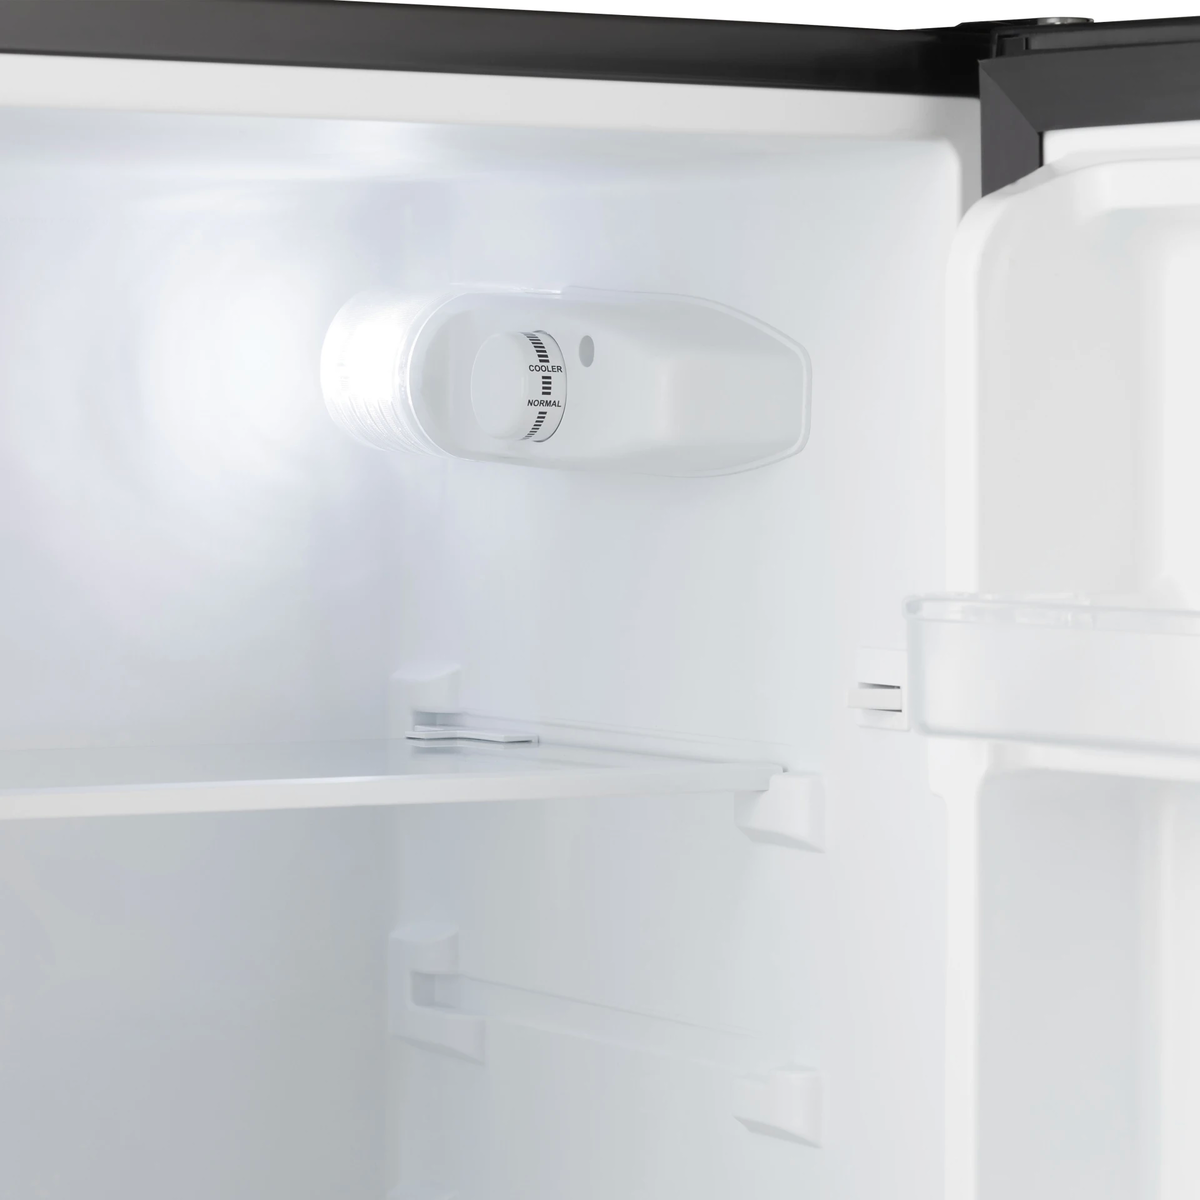 Inventum KK471B/W tafelmodel koelkast